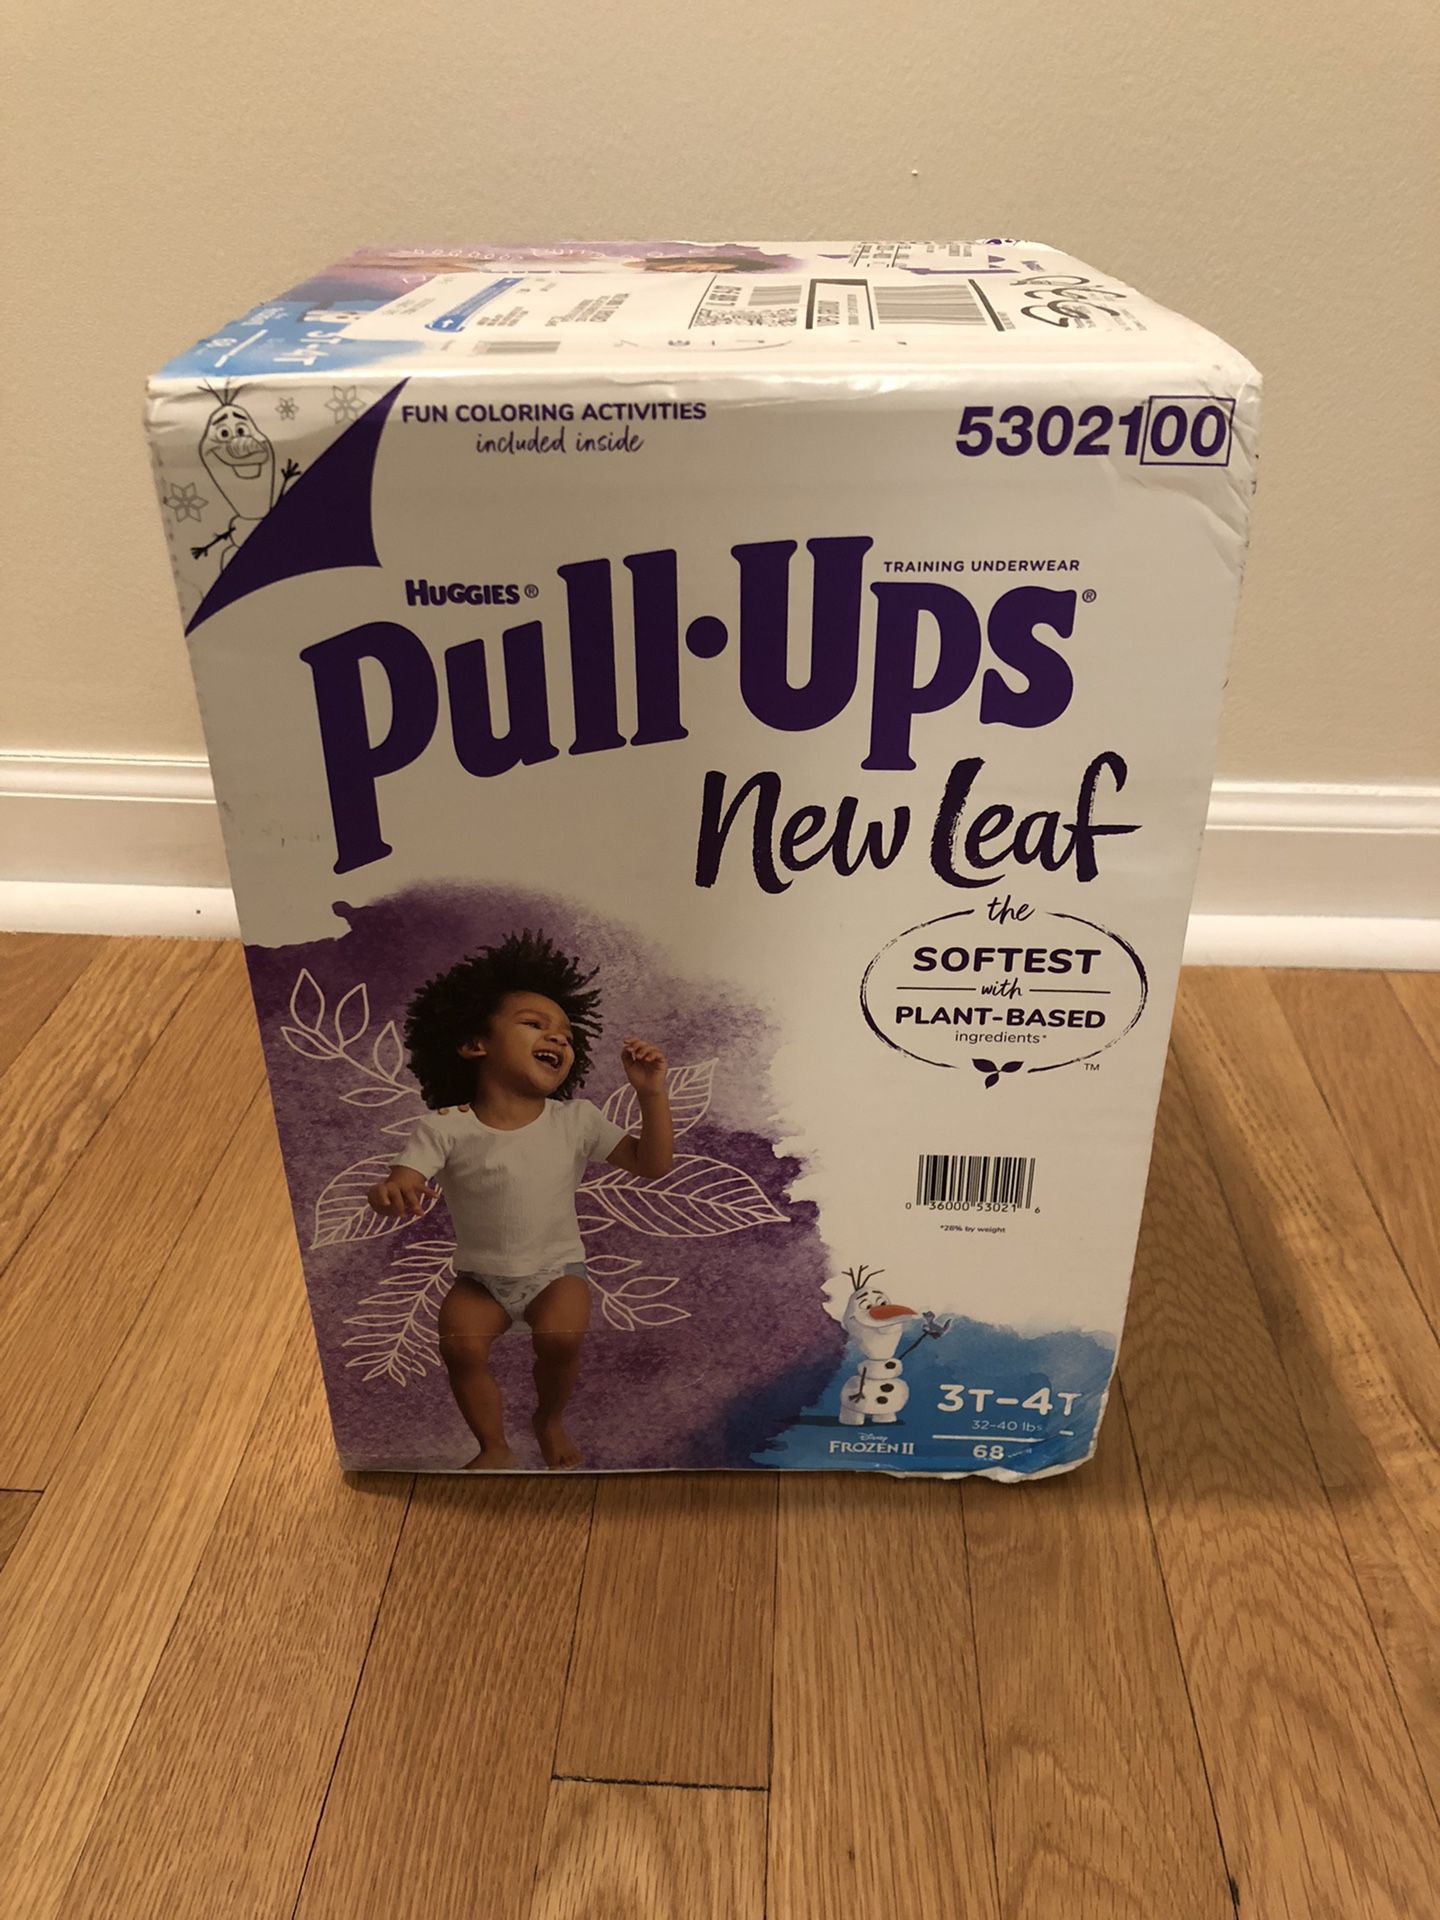 Huggies Pull-Ups Diapers New Leaf 3T-4T